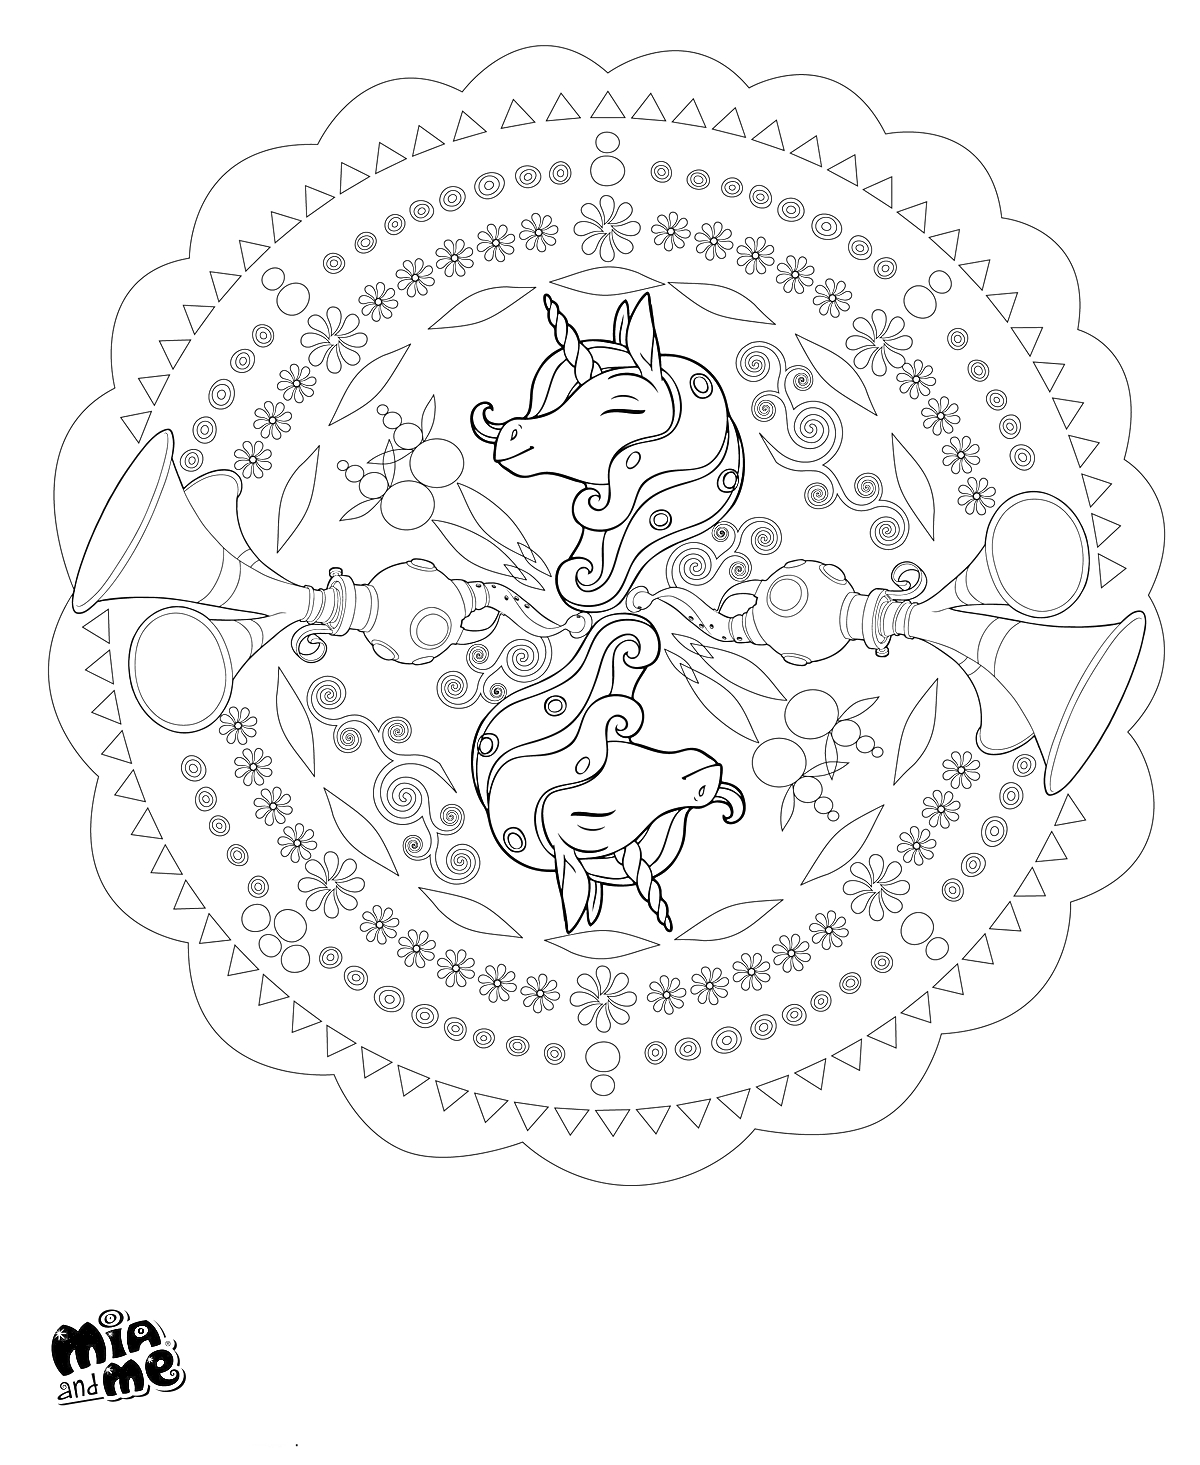 Две лошади в центре круглого мандалы с цветами и узорами, логотип 